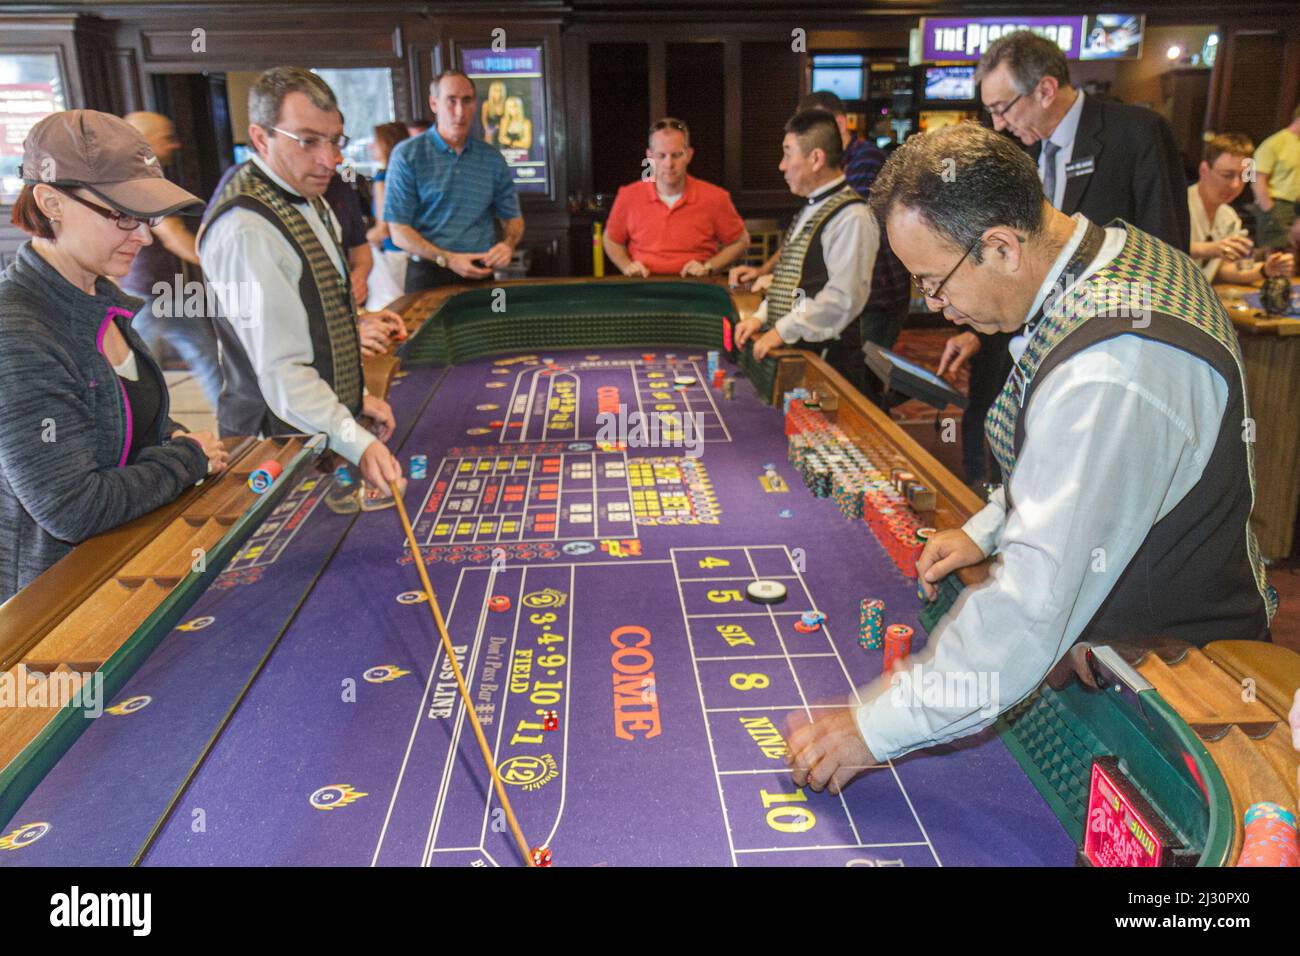 Las Vegas Nevada,Strip,South Boulevard Harrah's Hotel casino,gamblers gambling,craps table,employees workers boxman base dealer stickman men players Stock Photo